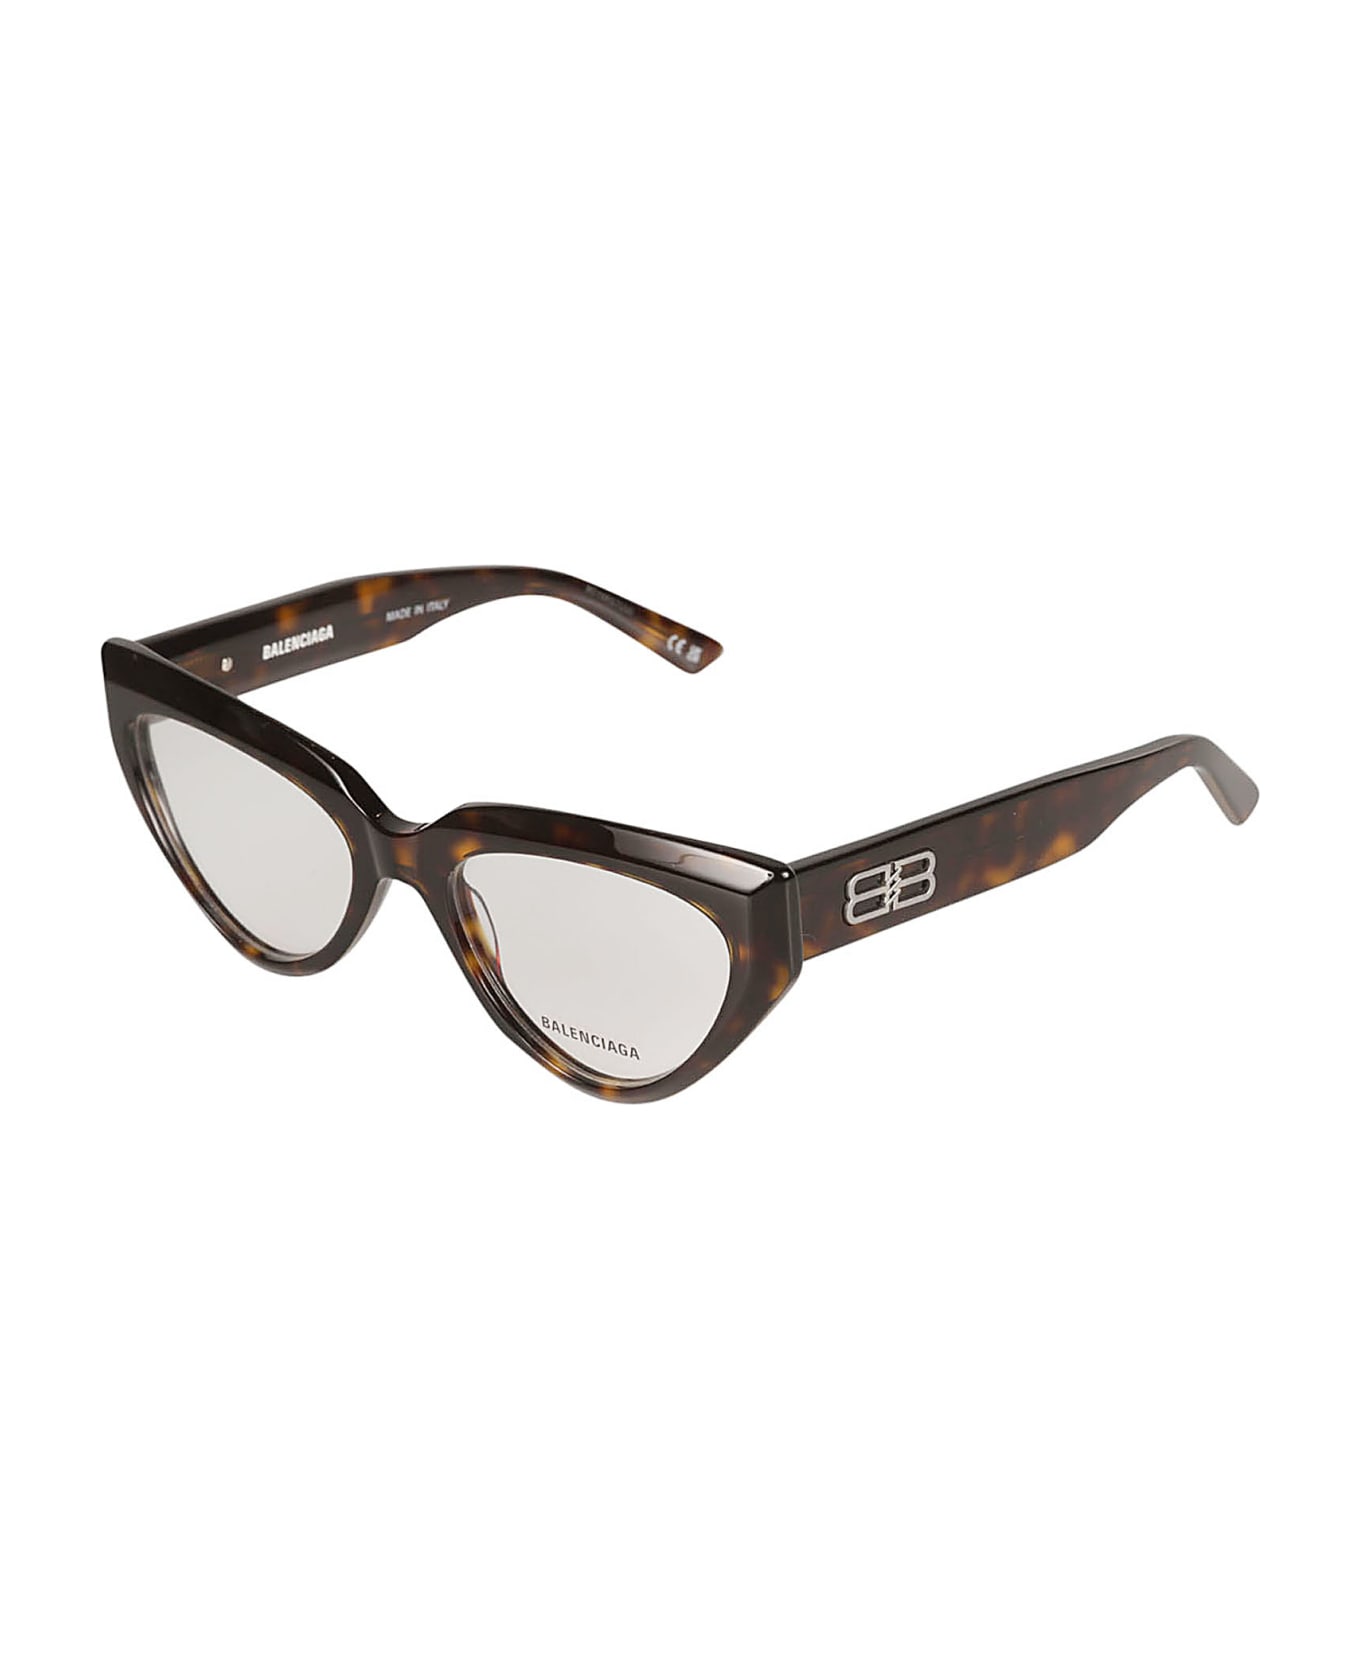 Balenciaga Eyewear Bb Plaque Cat Eye Frame Glasses - Havana/Transparent